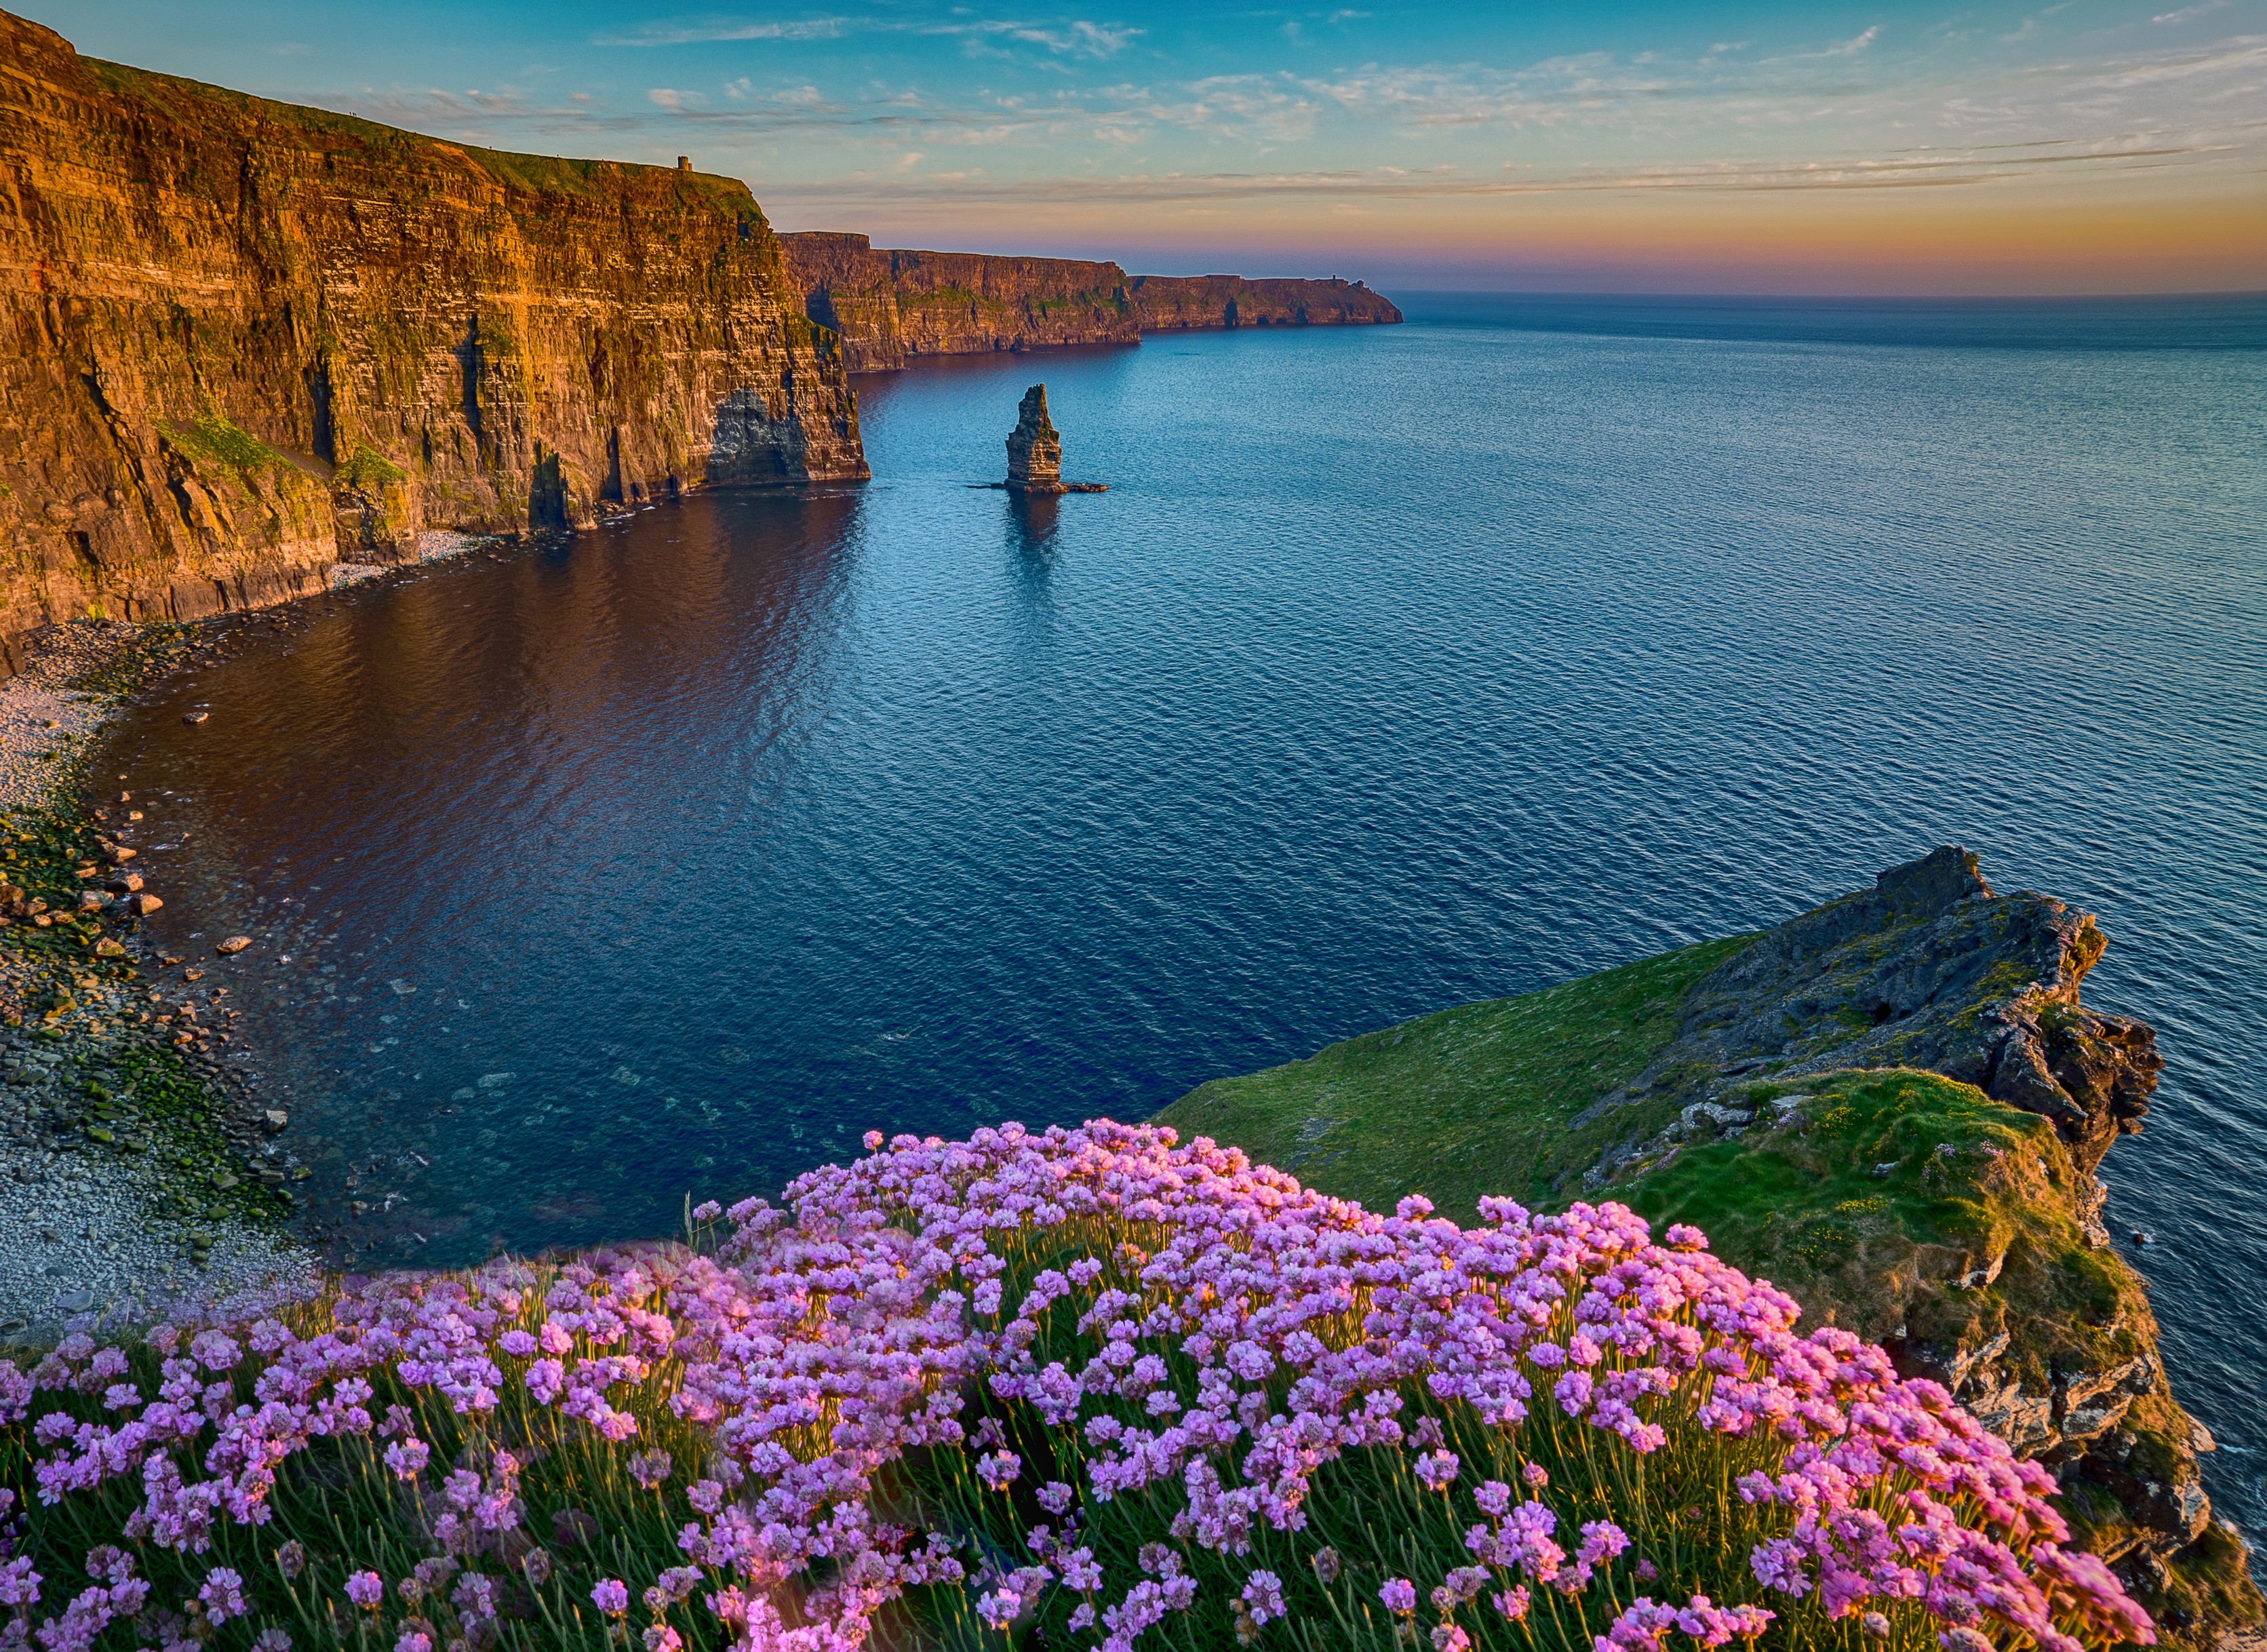 Cliffs, Swells, and Cinematic Views Along Ireland's Wild Atlantic Way